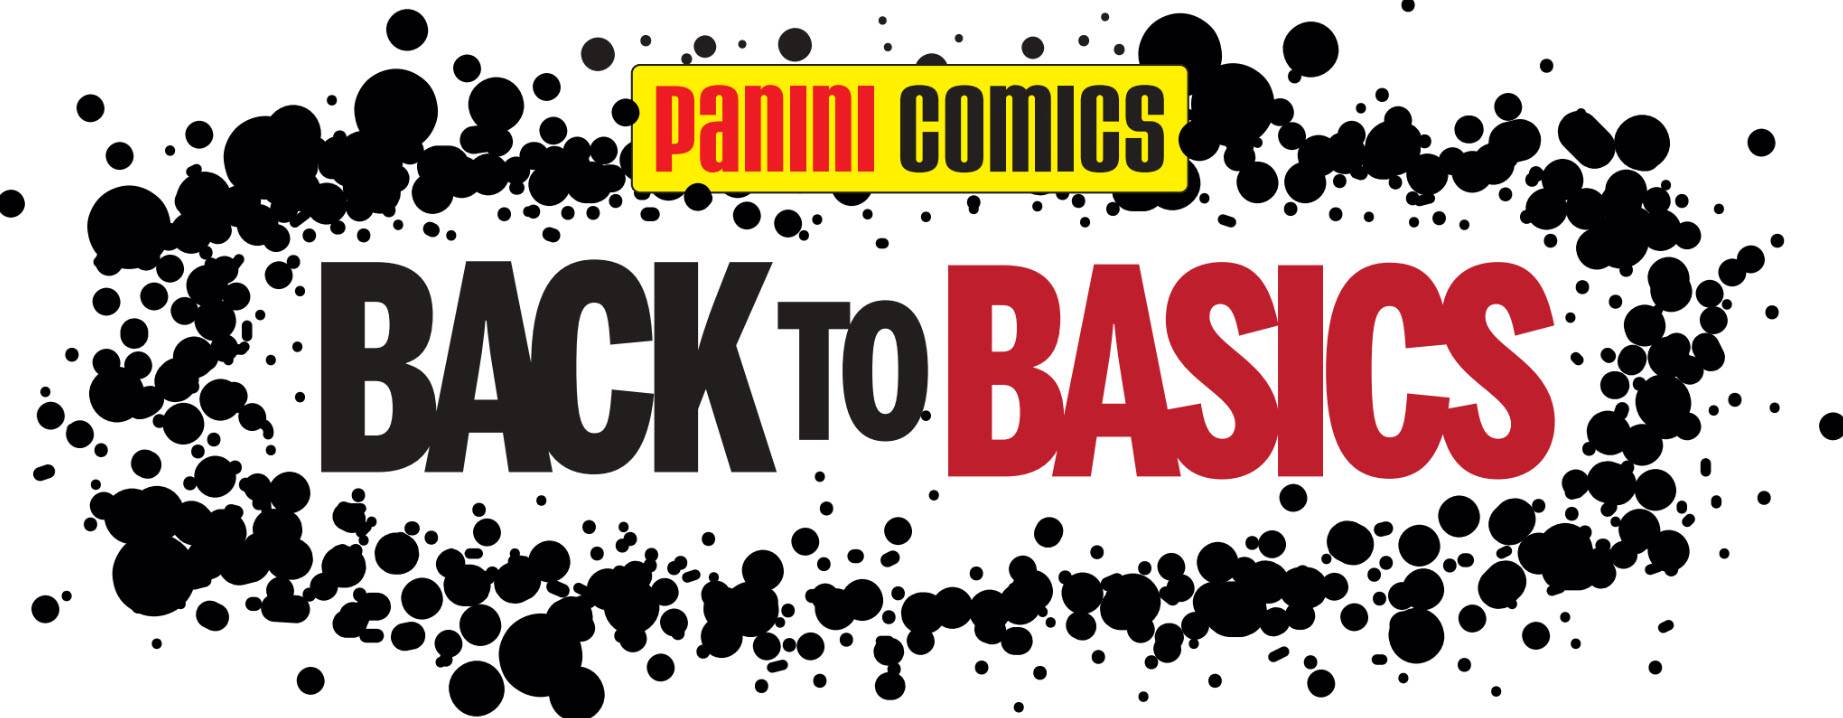 Noticia: Panini Comics Back to the basics